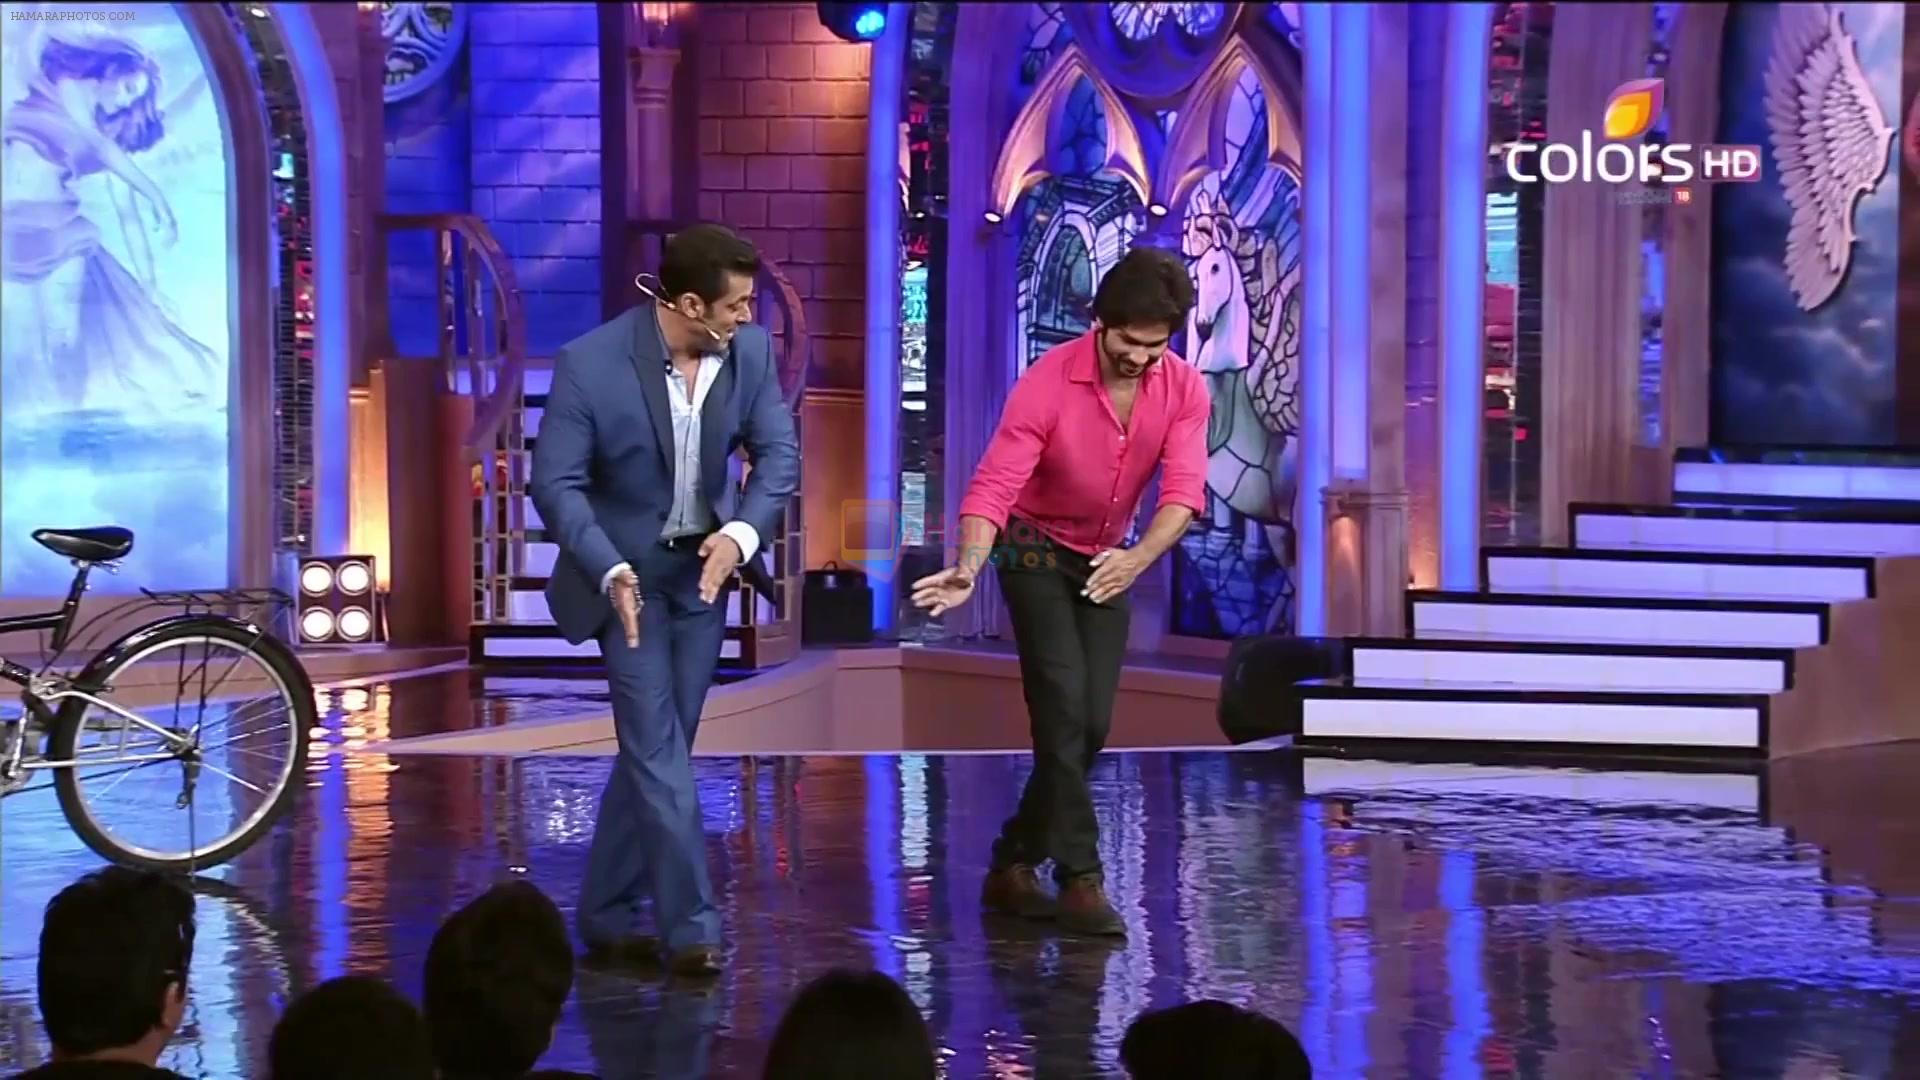 Shahid Kapoor and Salman Khan Dancing on Bigg Boss Season 7 - Day 6